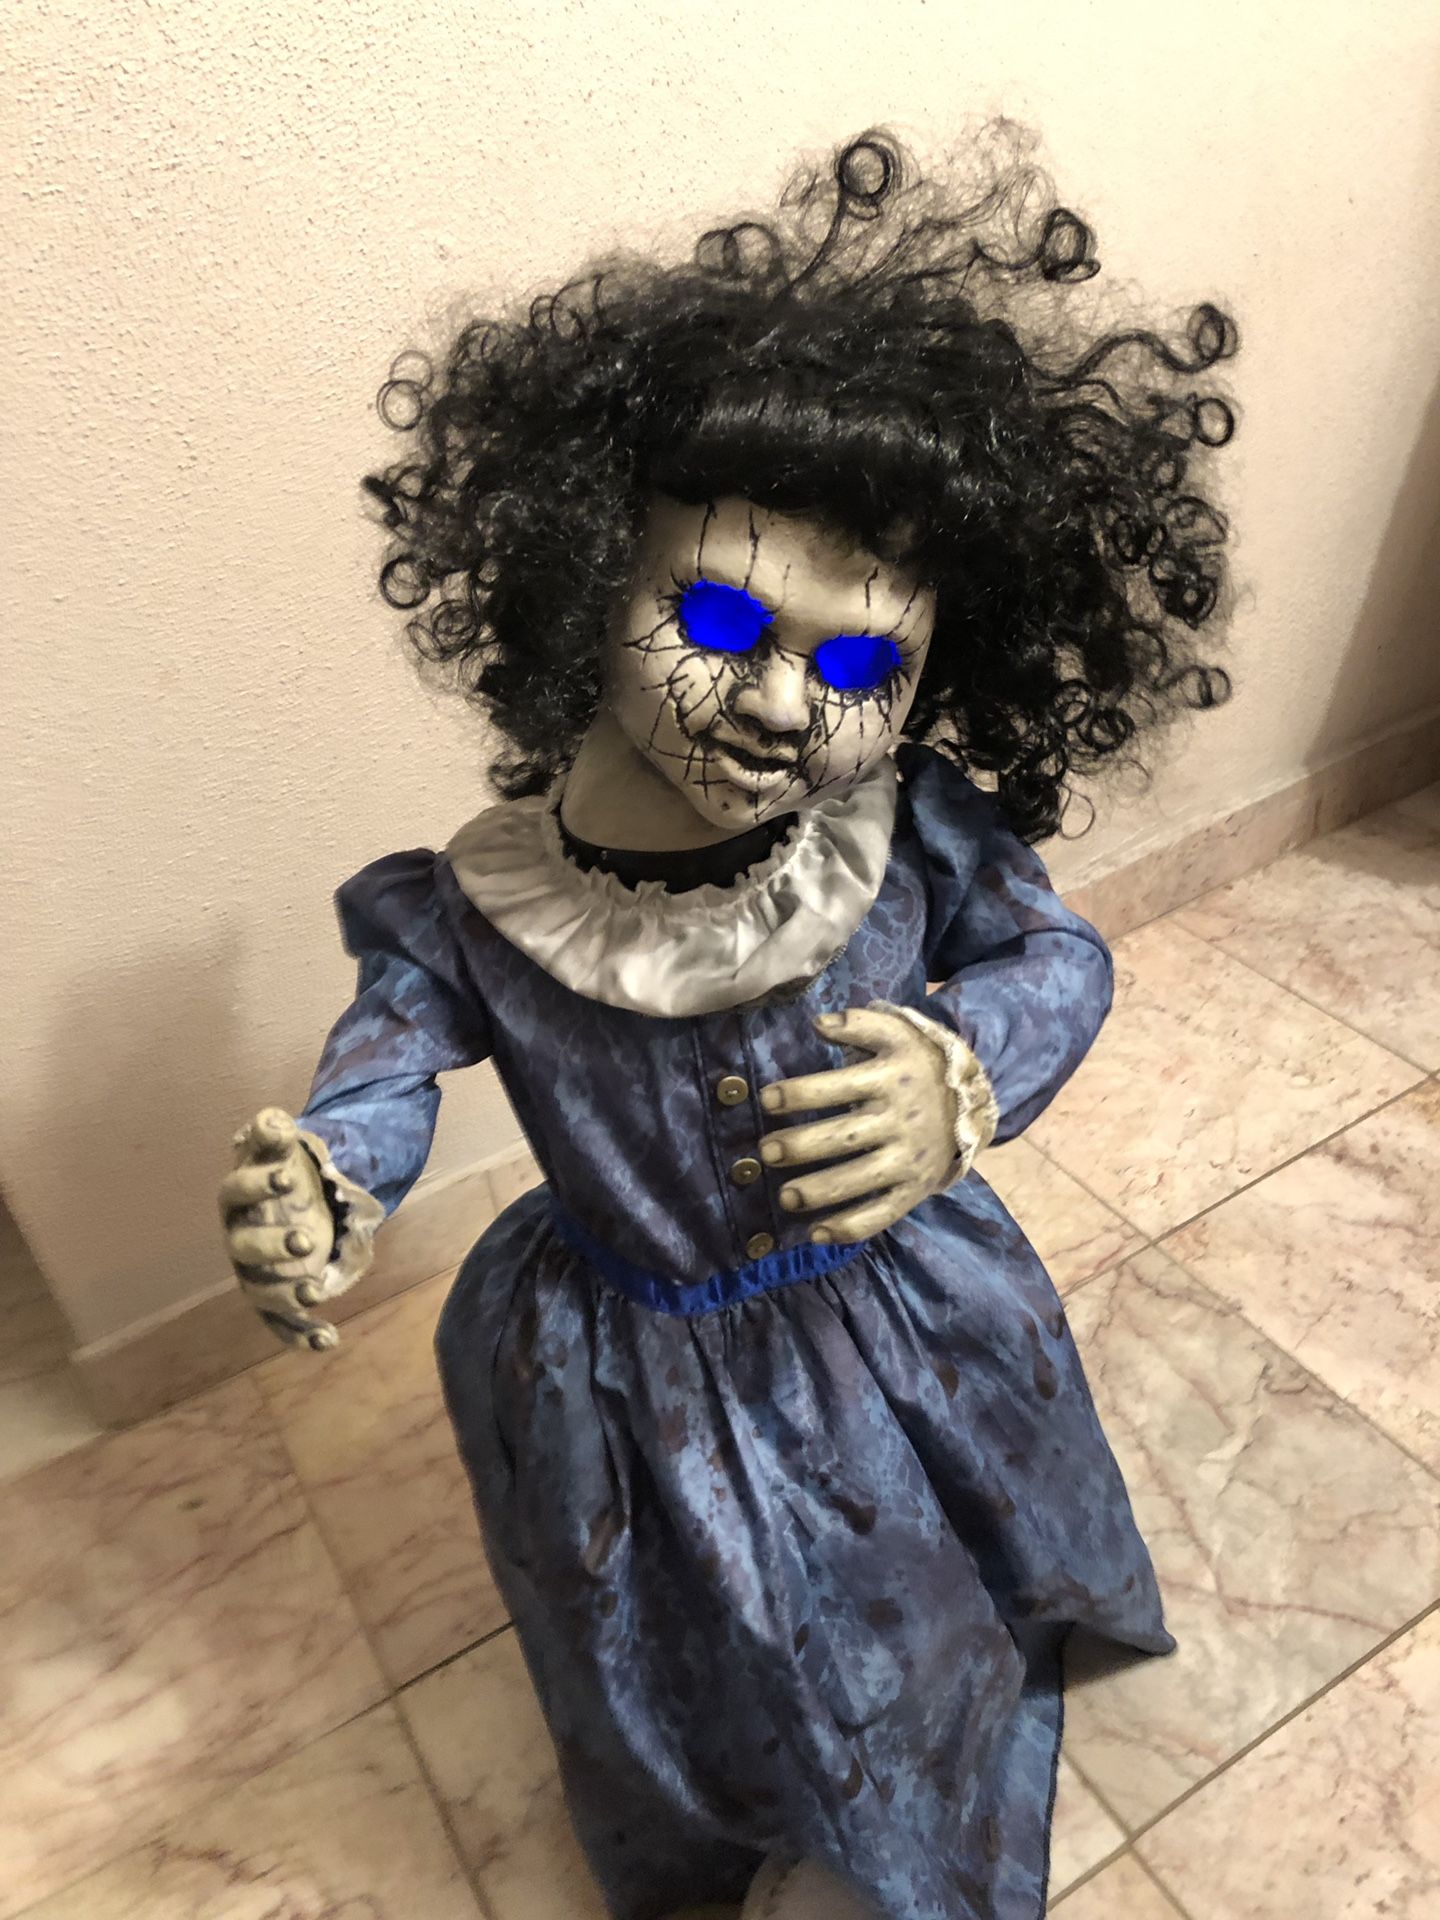 Halloween doll